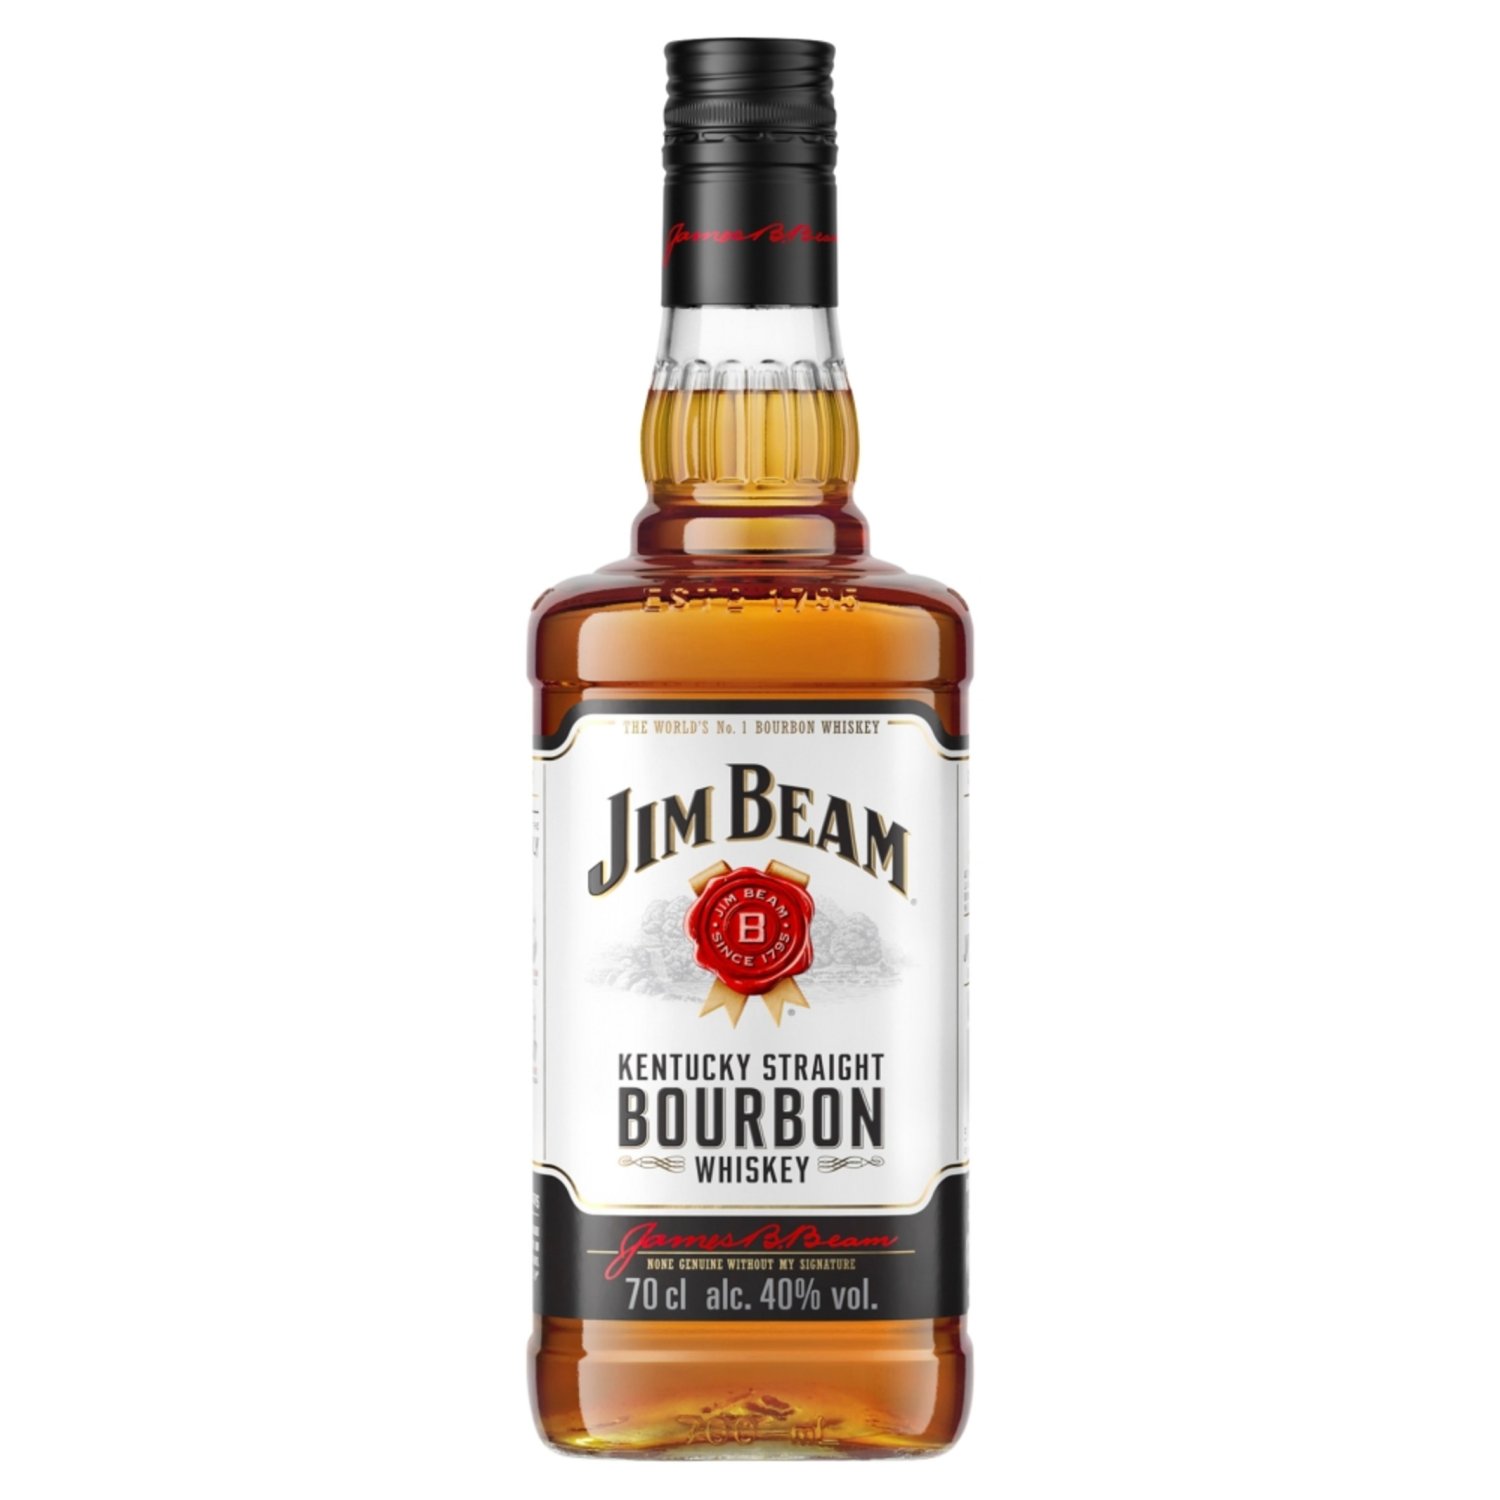 Jim Beam Bourbon Whiskey (70 cl)